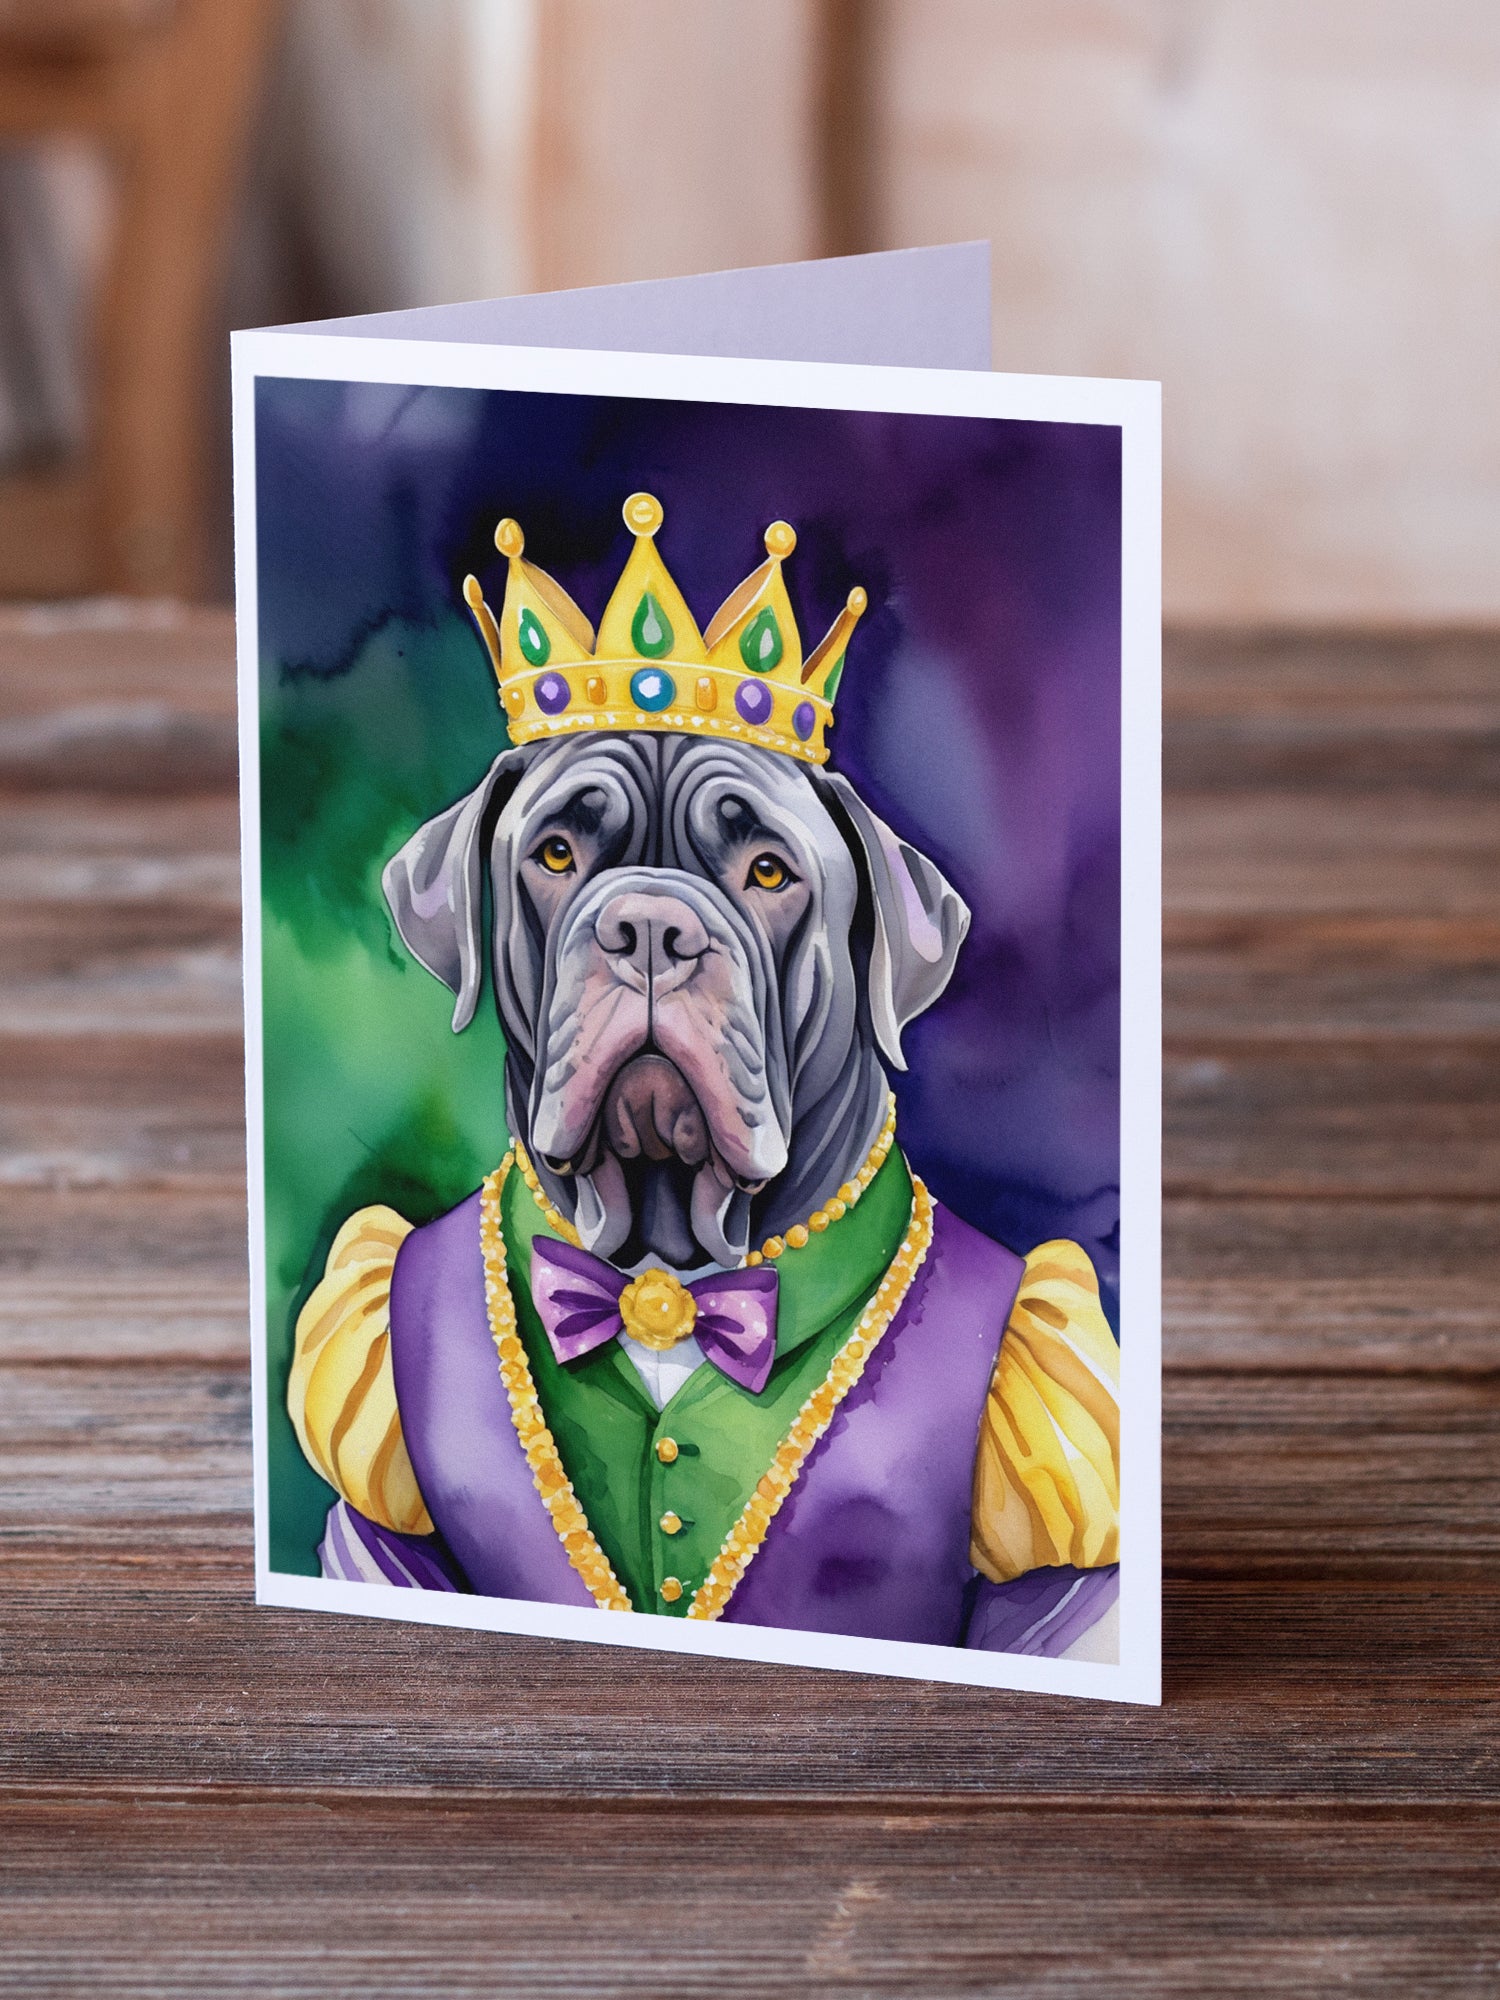 Buy this Neapolitan Mastiff King of Mardi Gras Greeting Cards Pack of 8